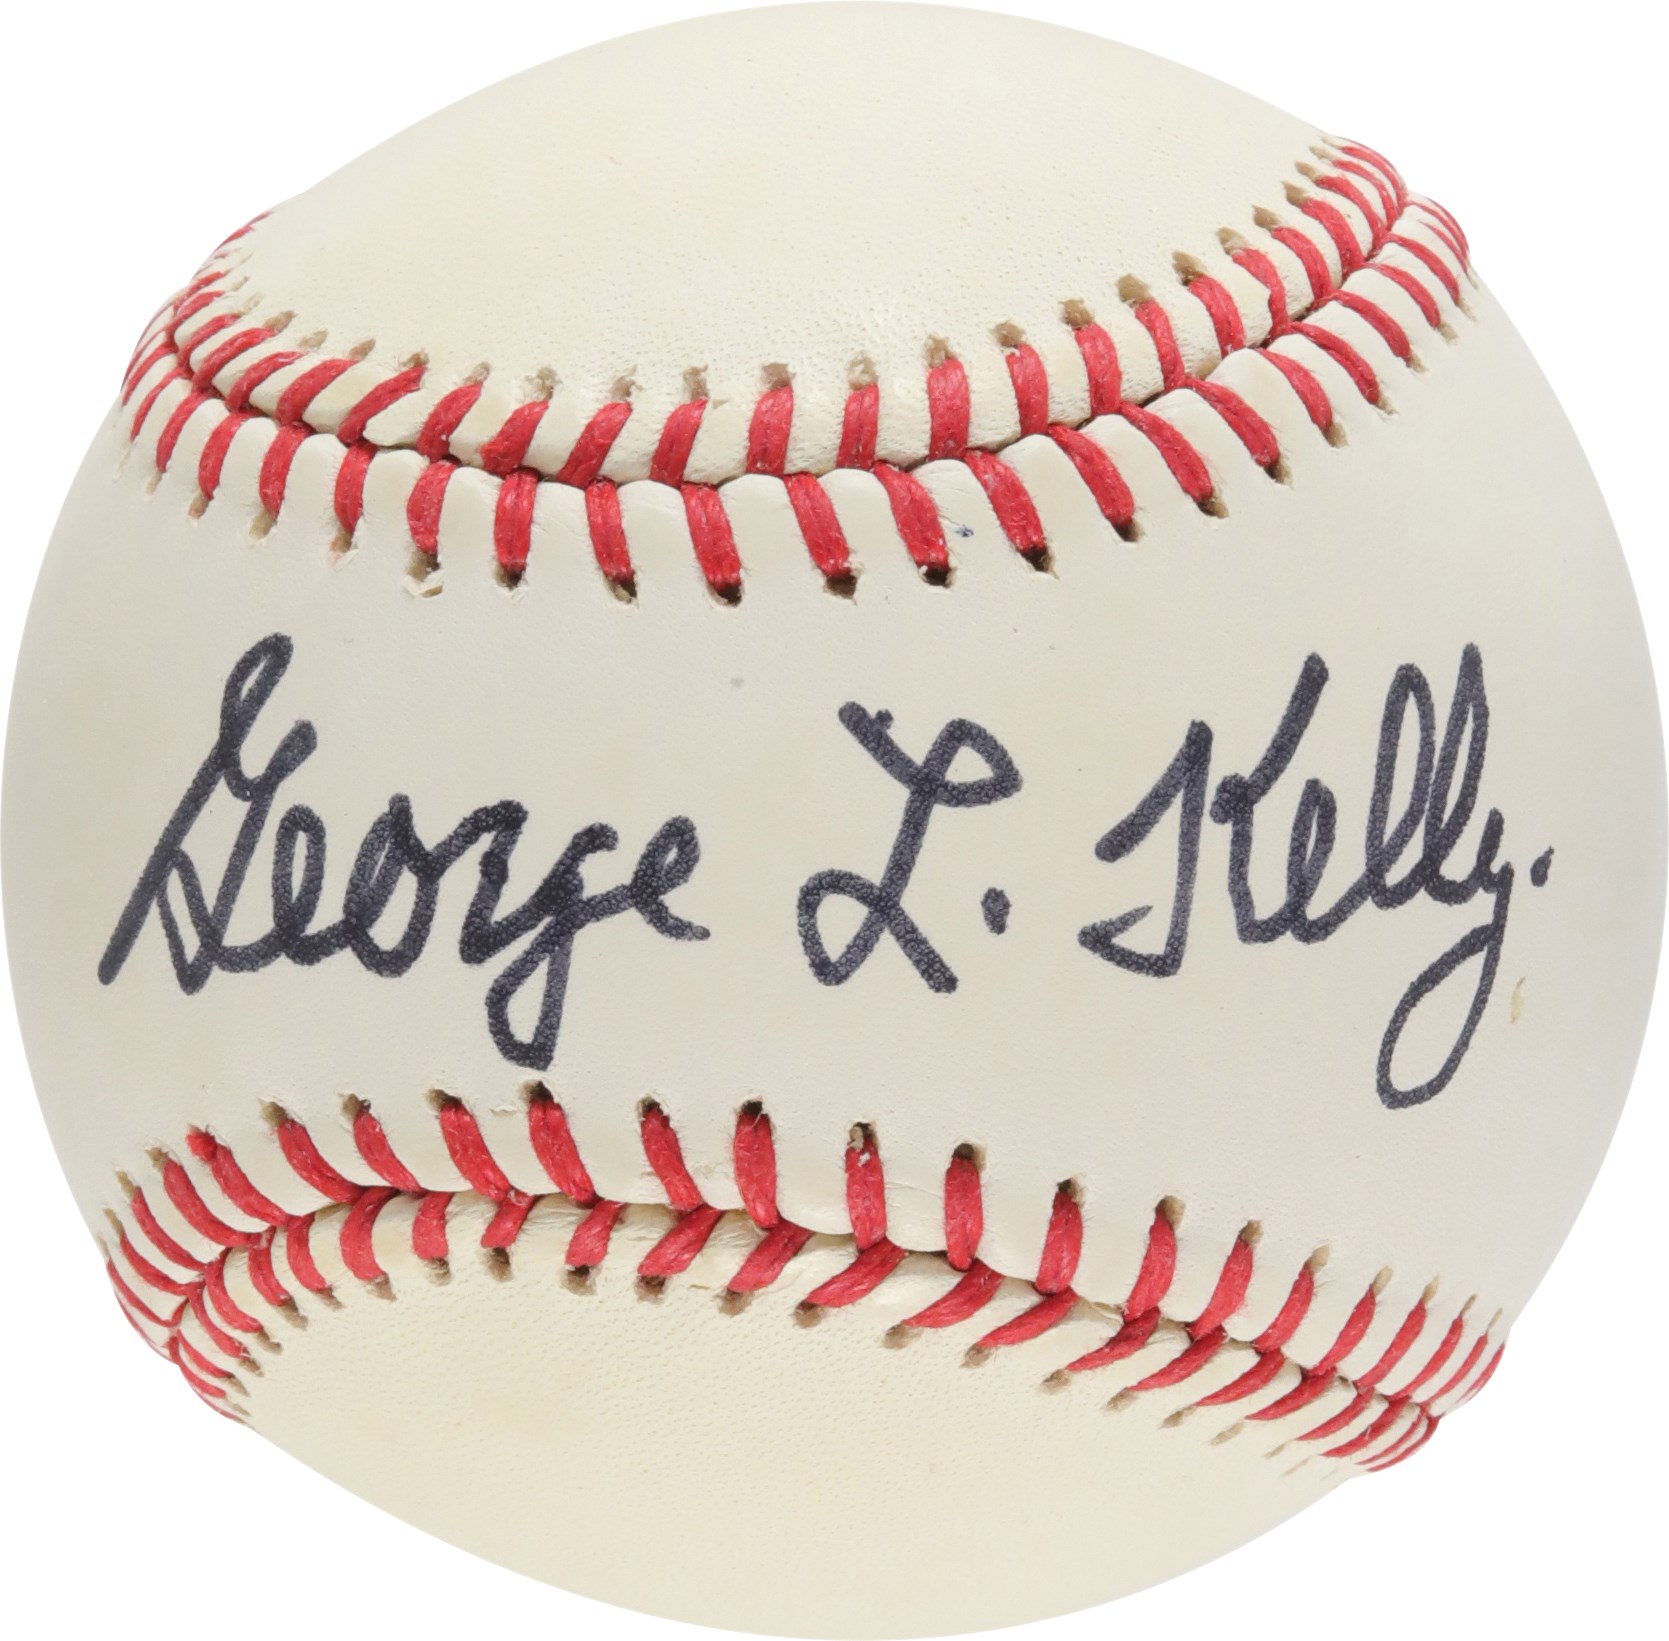 Baseball Autographs - Finest Known George Kelly Single-Signed Baseball (PSA GEM MINT 10 Auto)